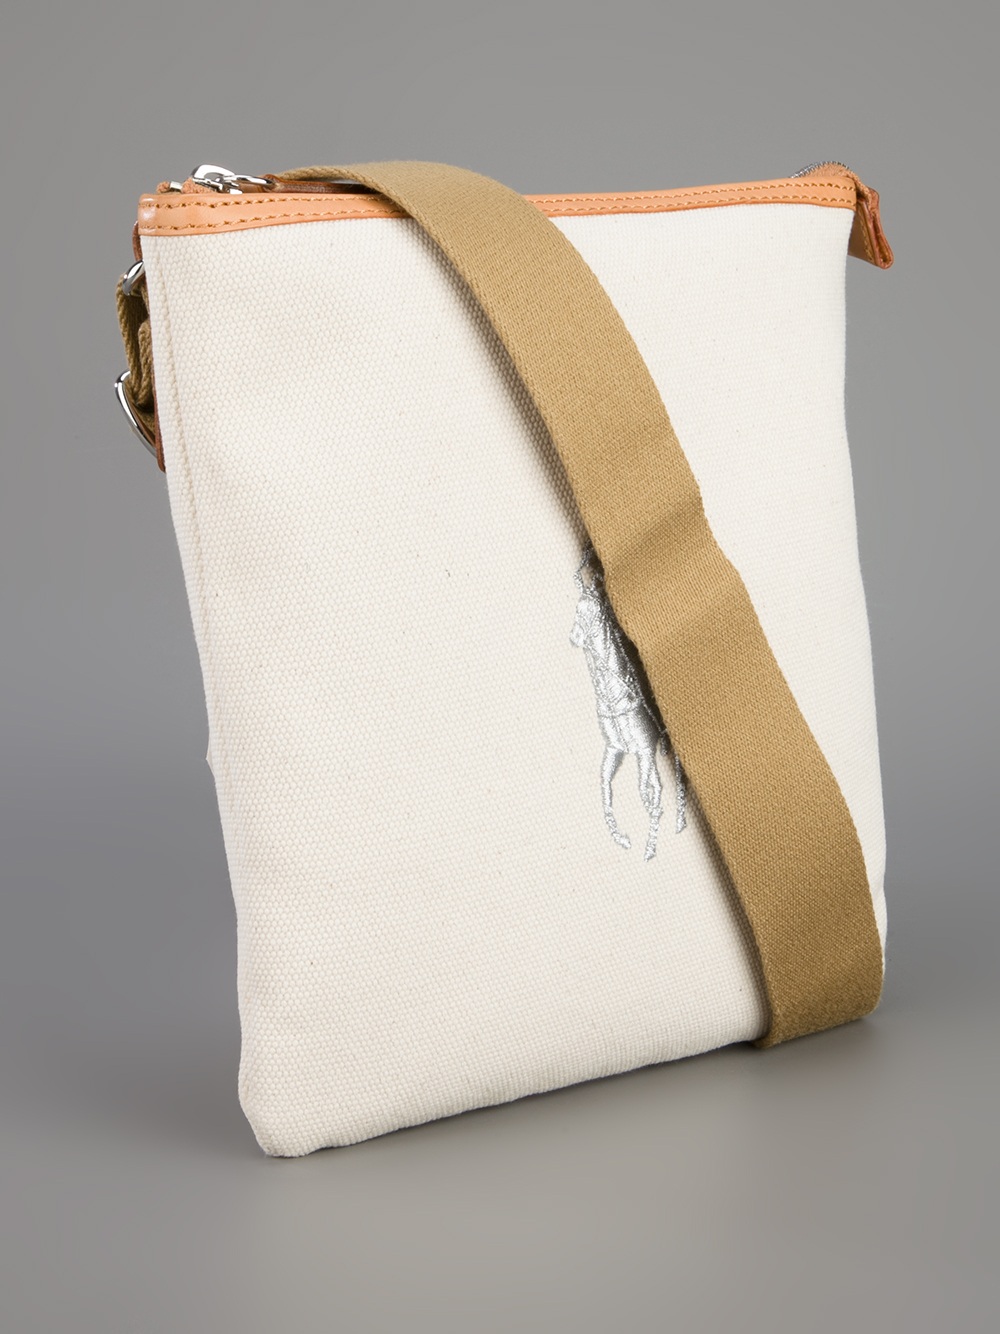 Lyst - Ralph Lauren Blue Label Canvas Cross Body Bag in White